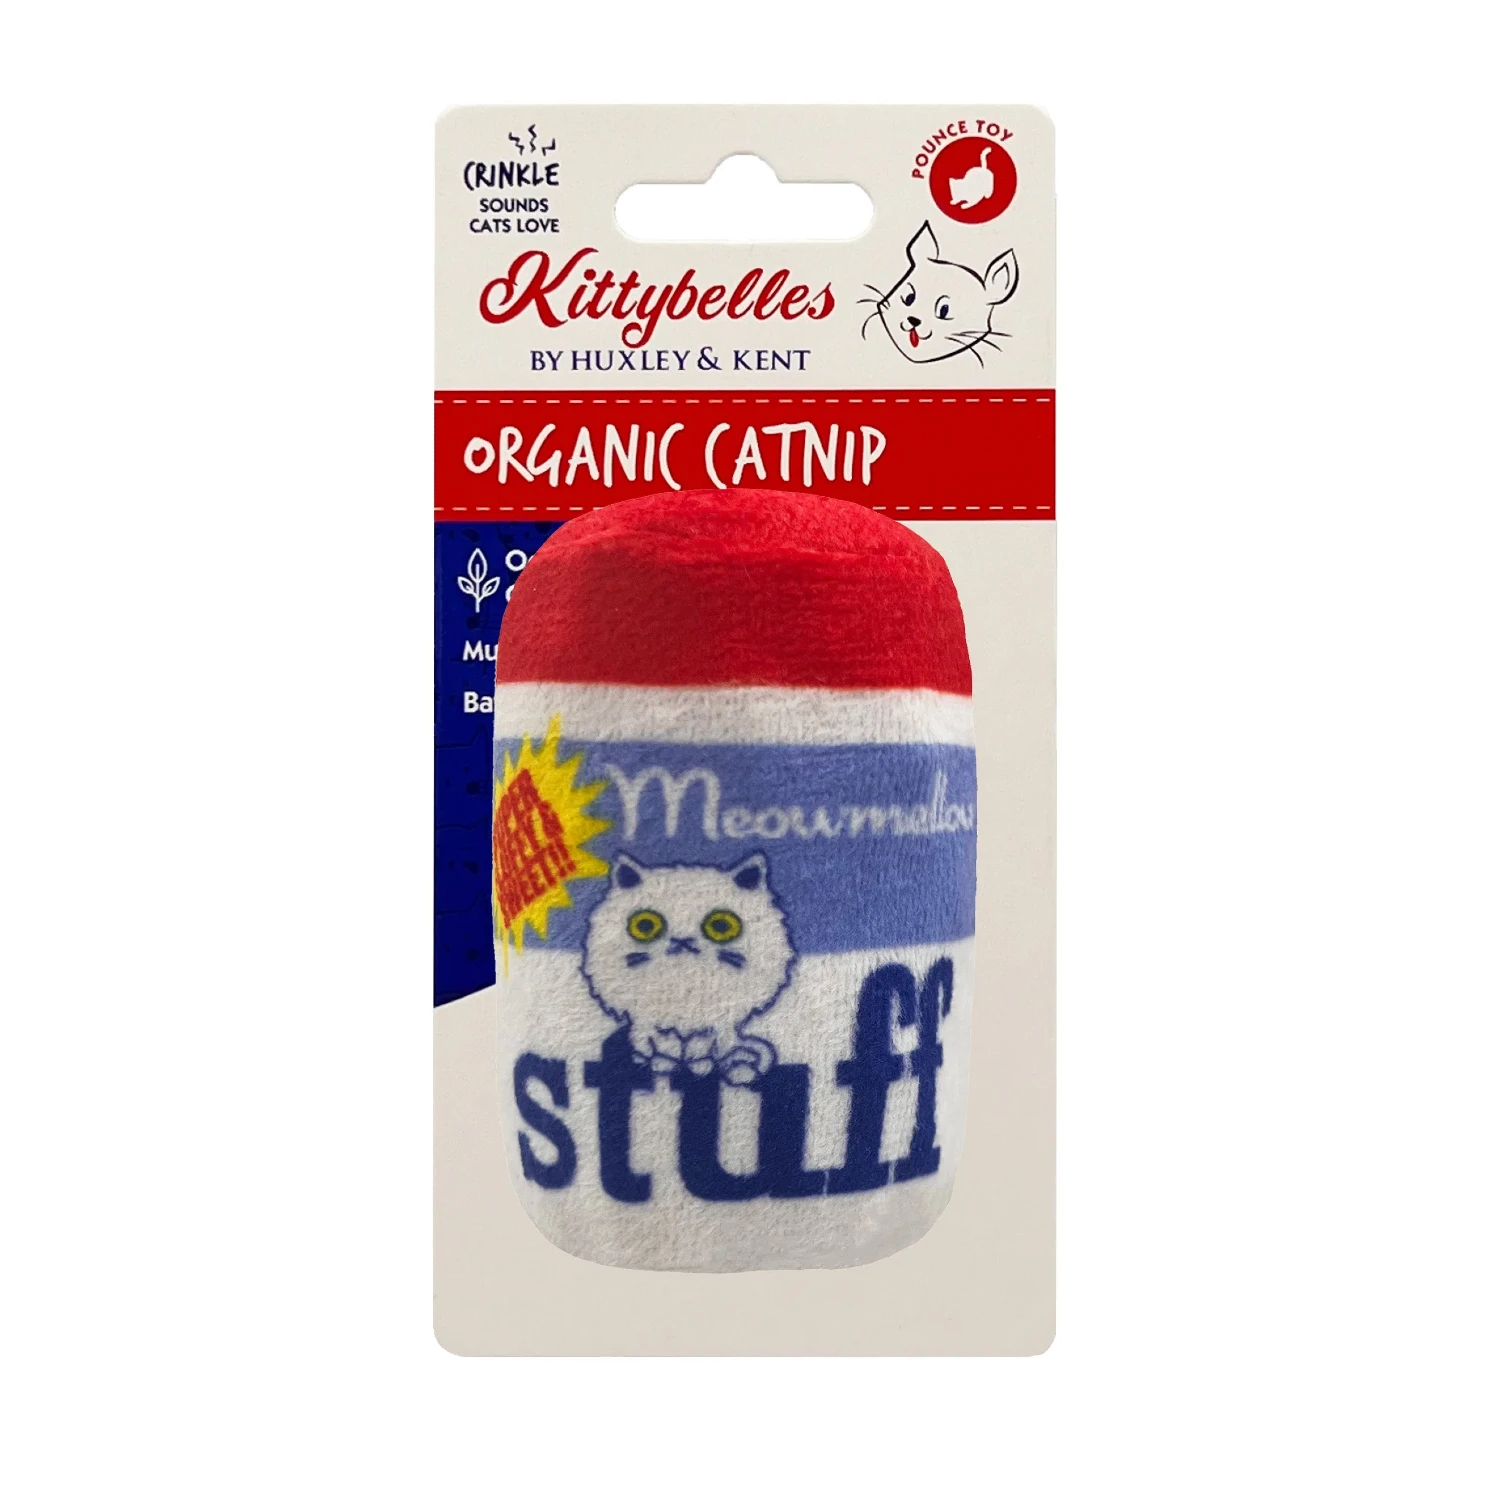 Kittybelles Food Plush Cat Toy - Meowmellow Stuff